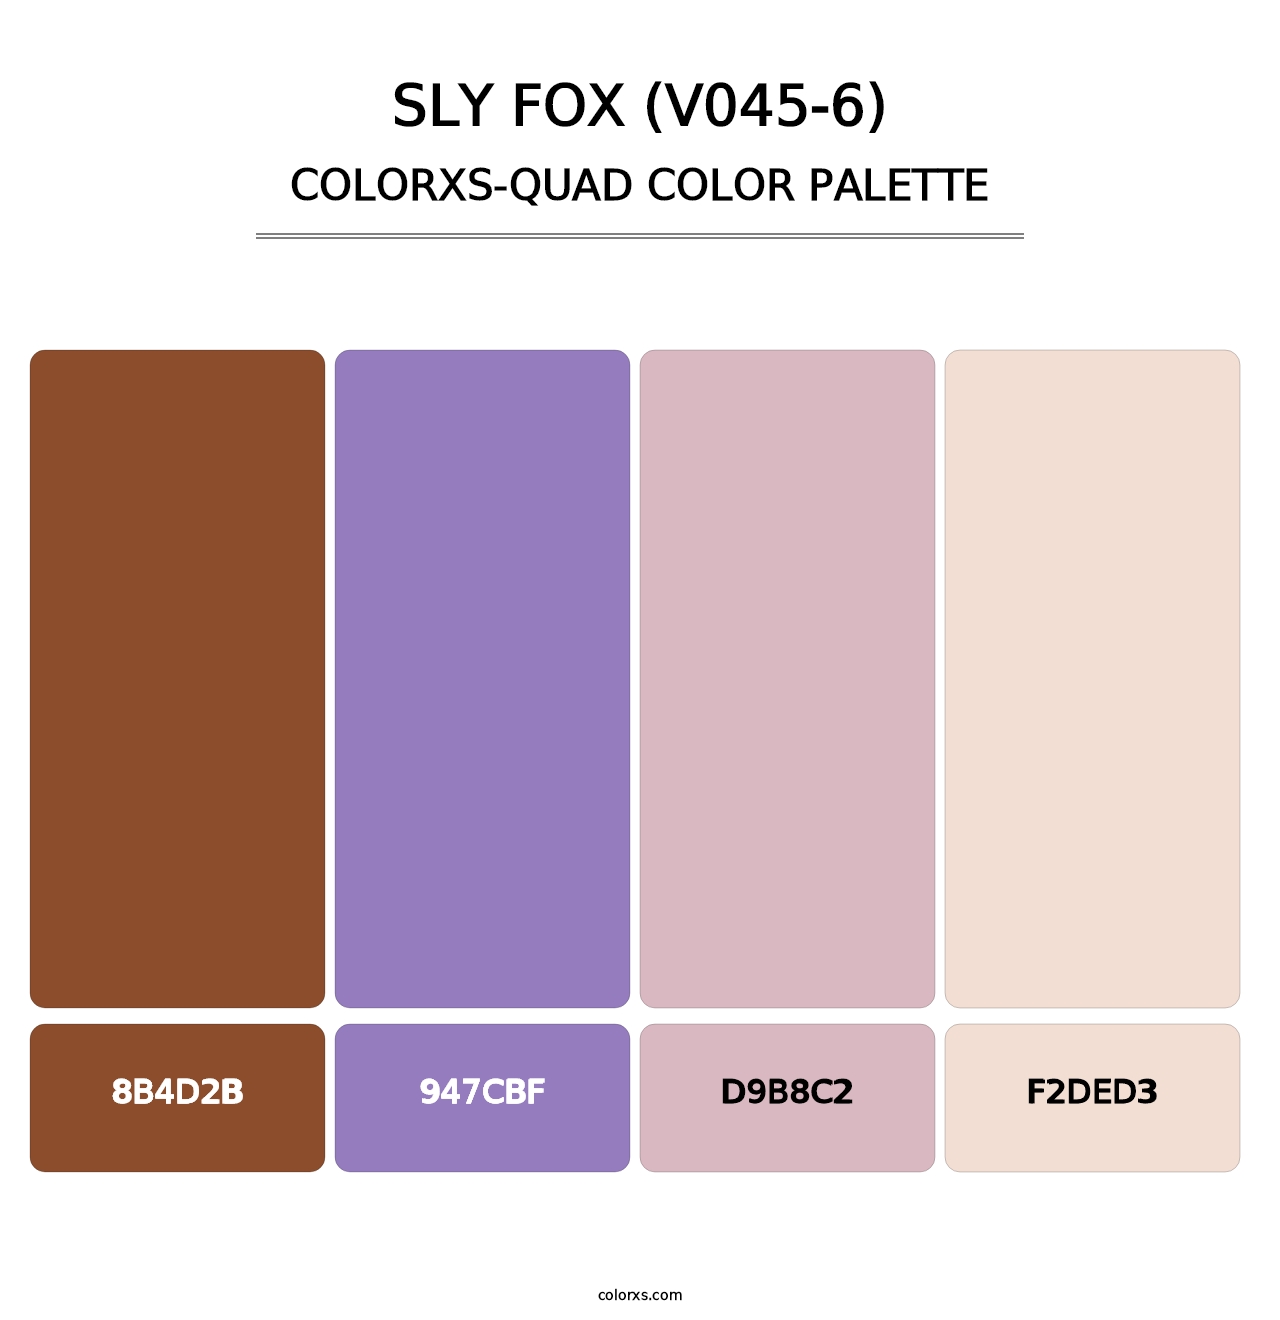 Sly Fox (V045-6) - Colorxs Quad Palette